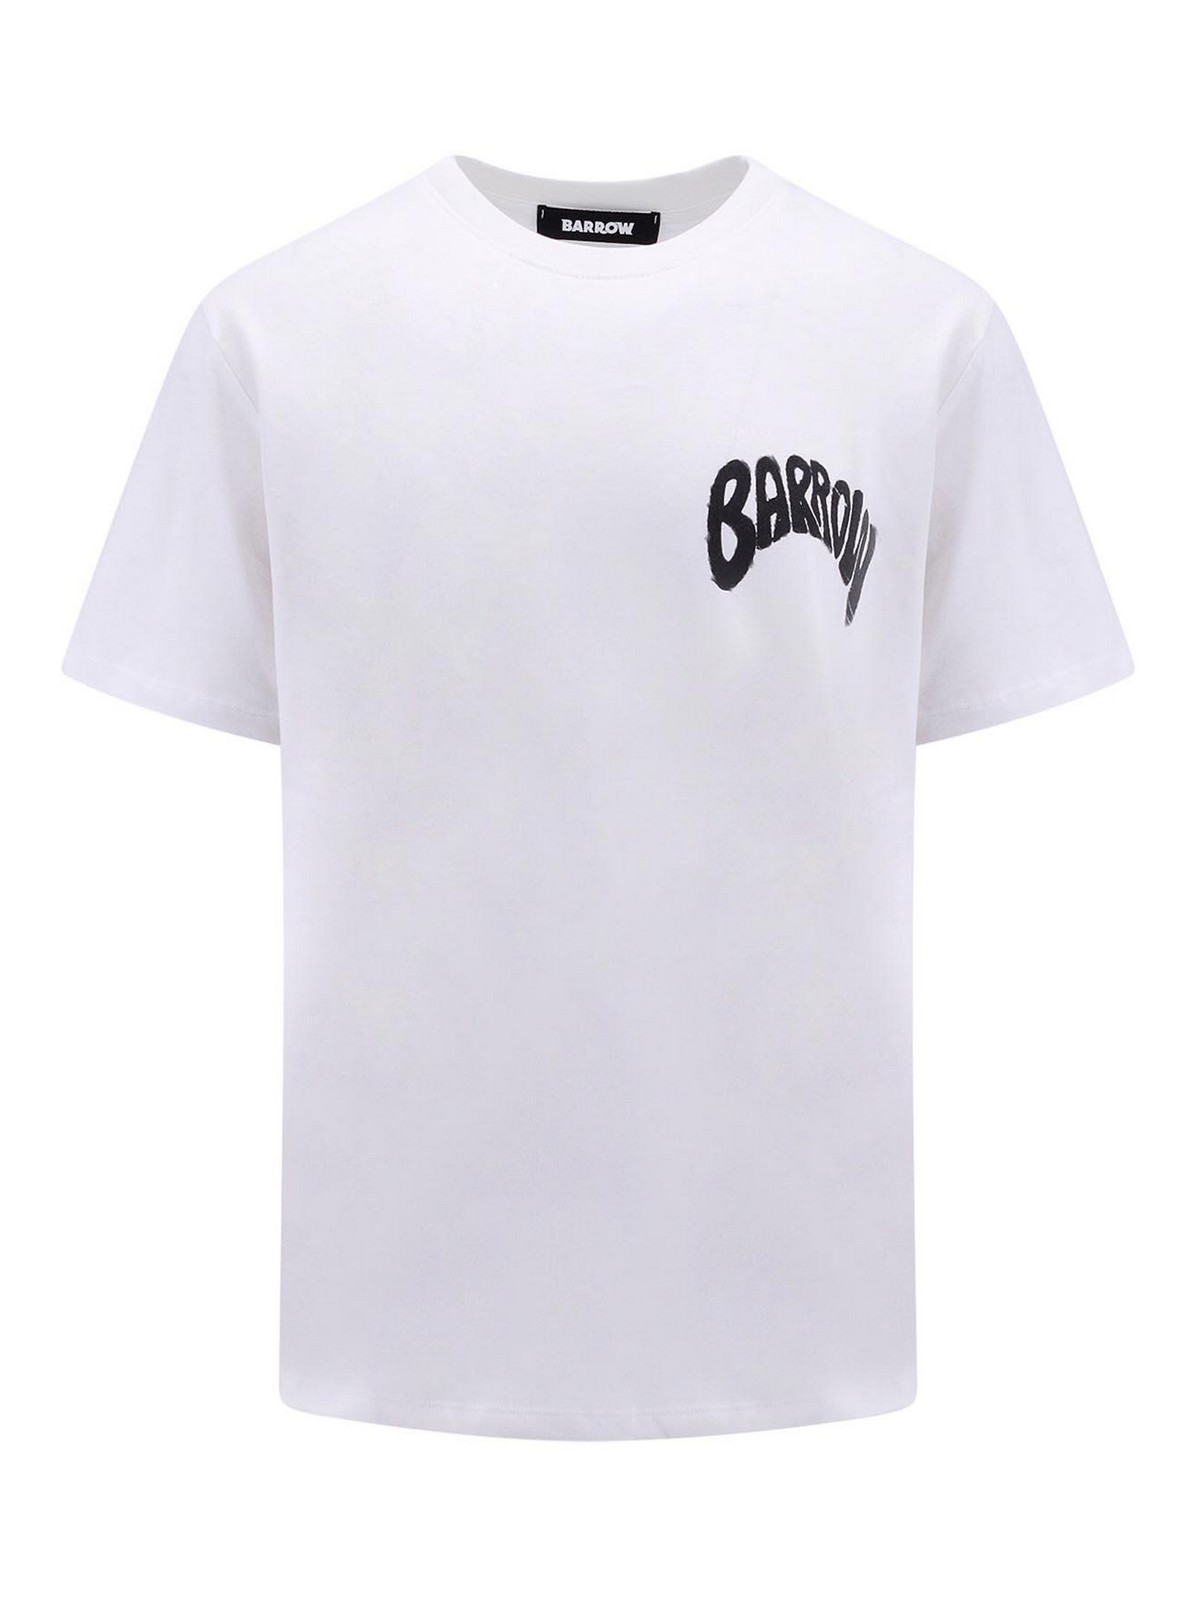 Camisetas, Arch - Camiseta White